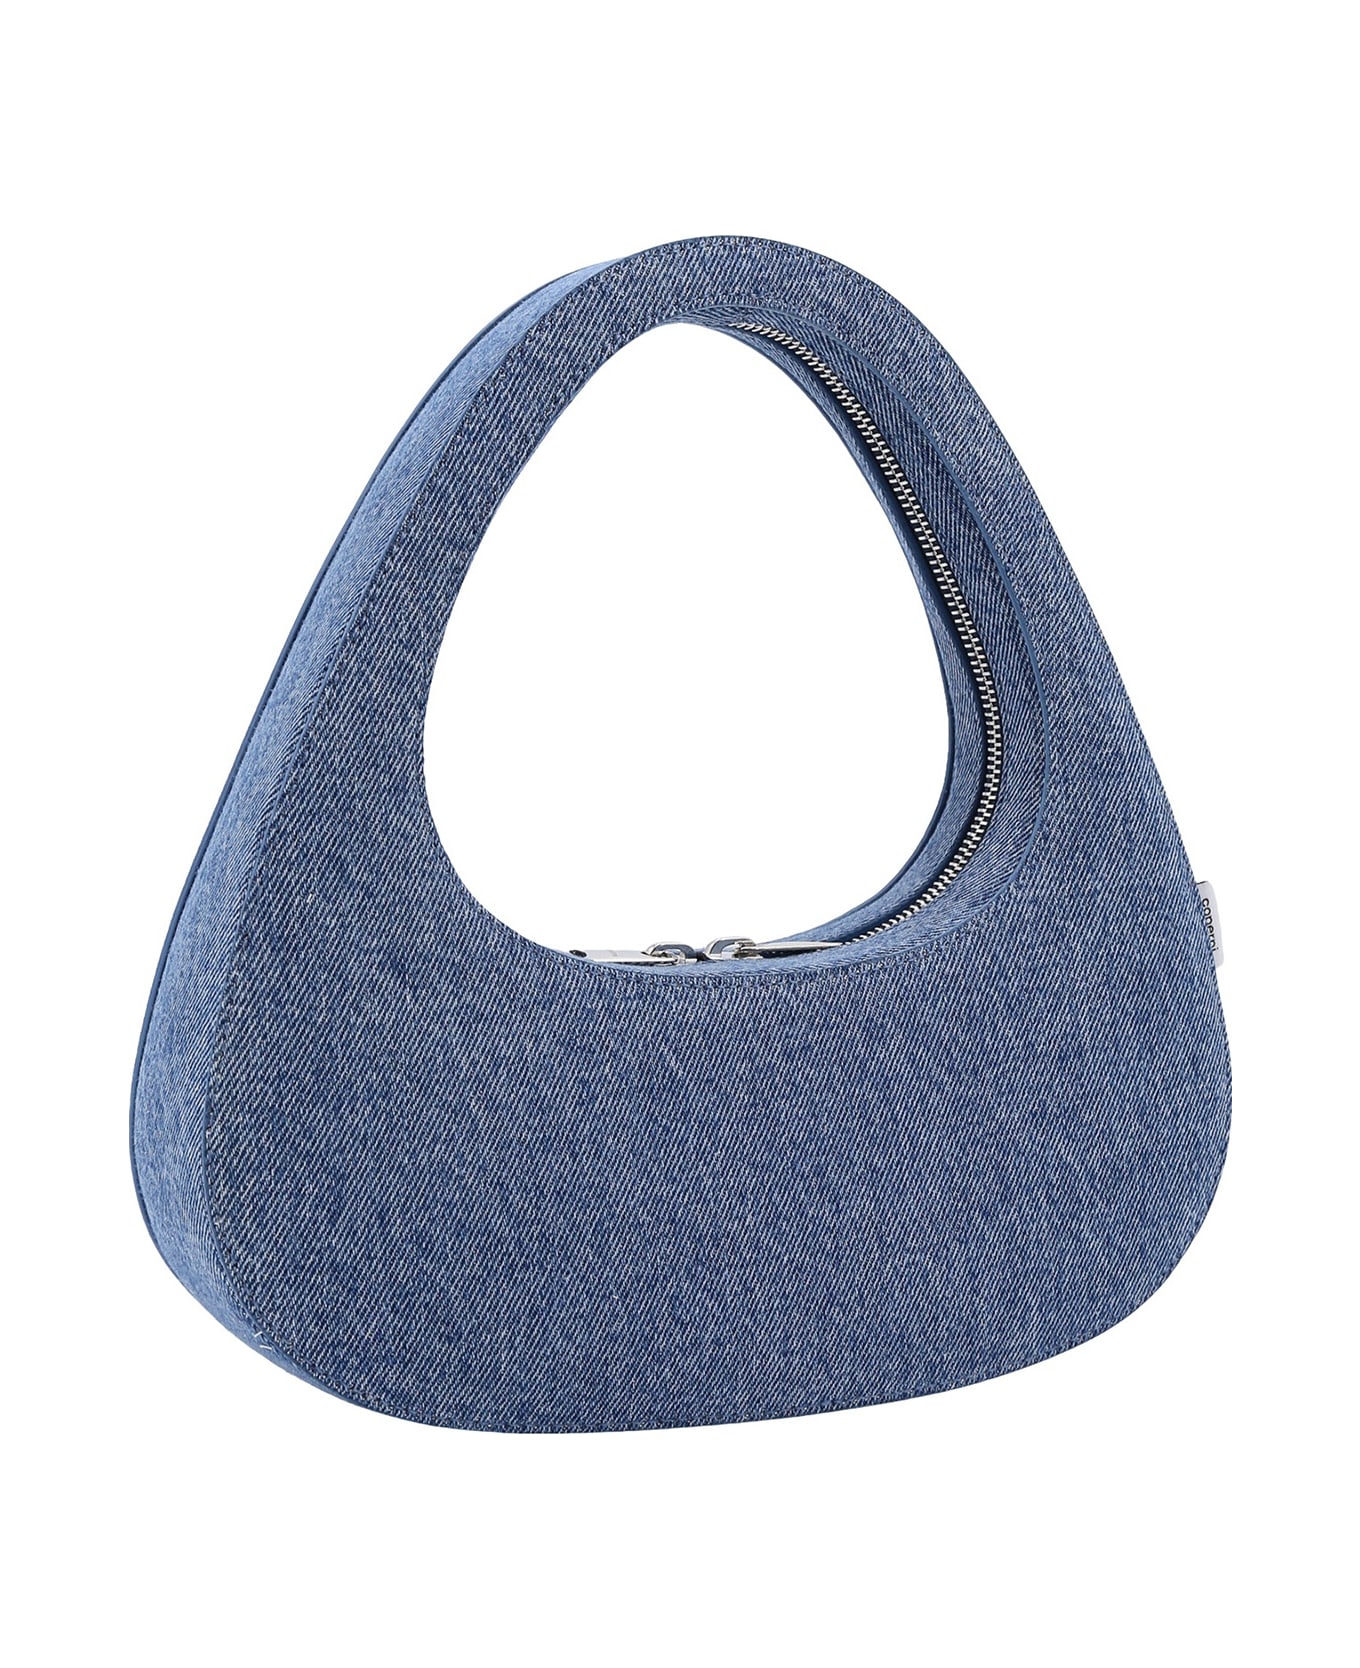 Coperni Handbag Tote - WASHED BLUE